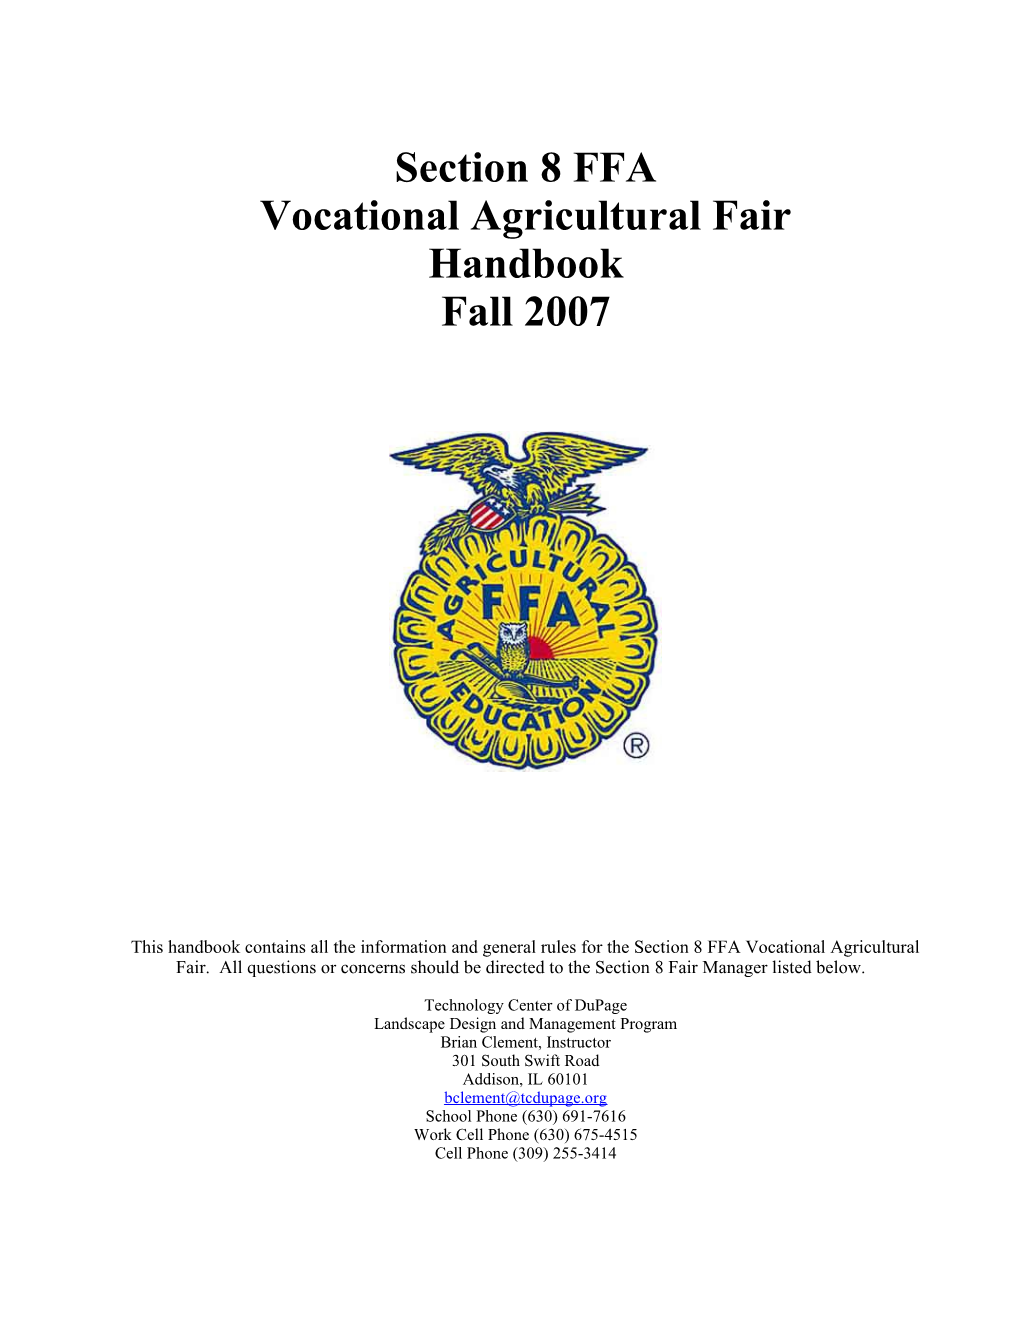 Vocational Agricultural Fair